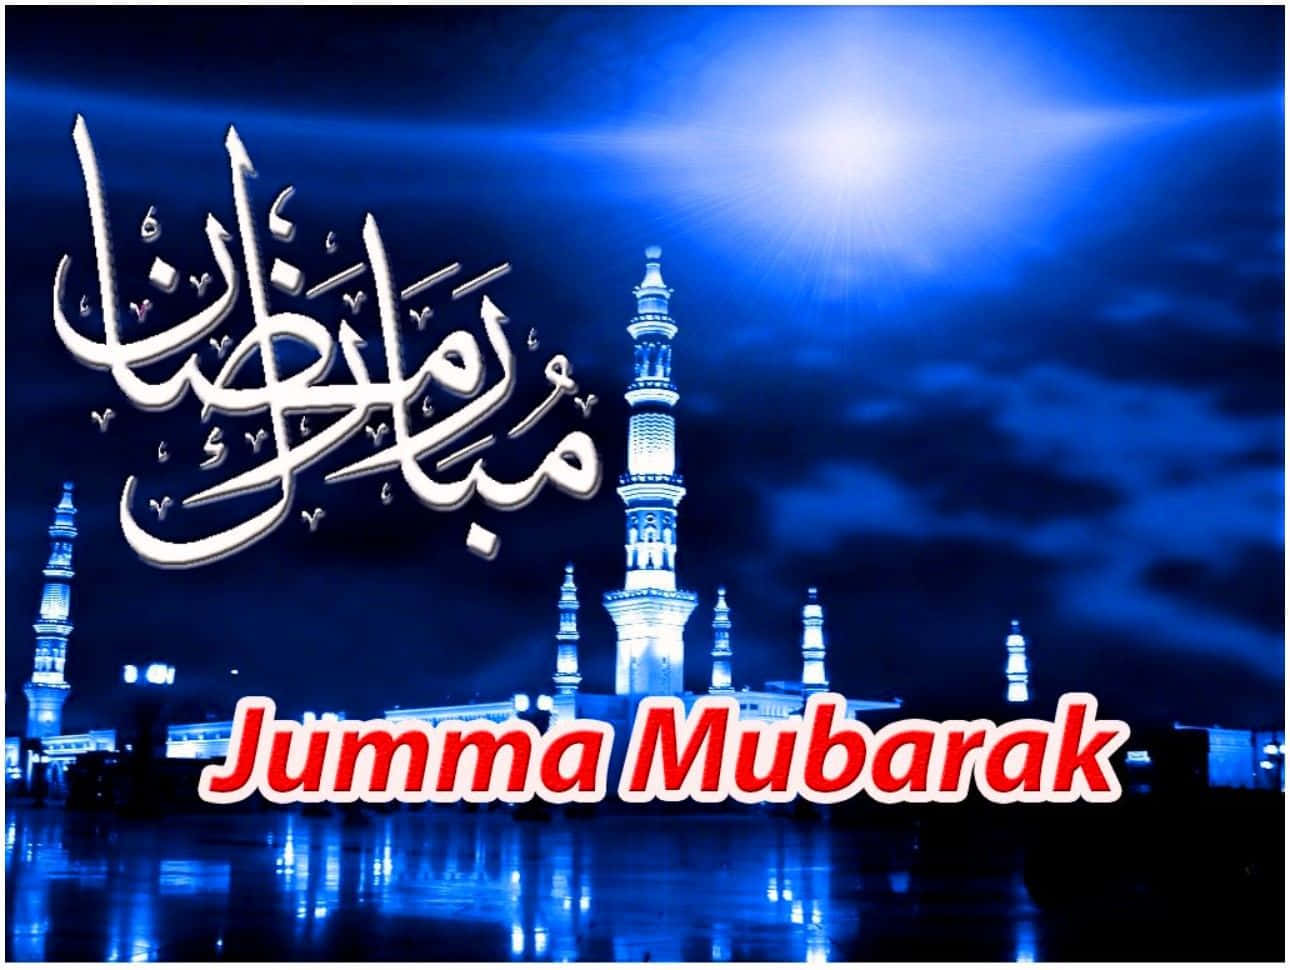 Jummamubarak - Un Hermoso Fondo De Pantalla Islámico